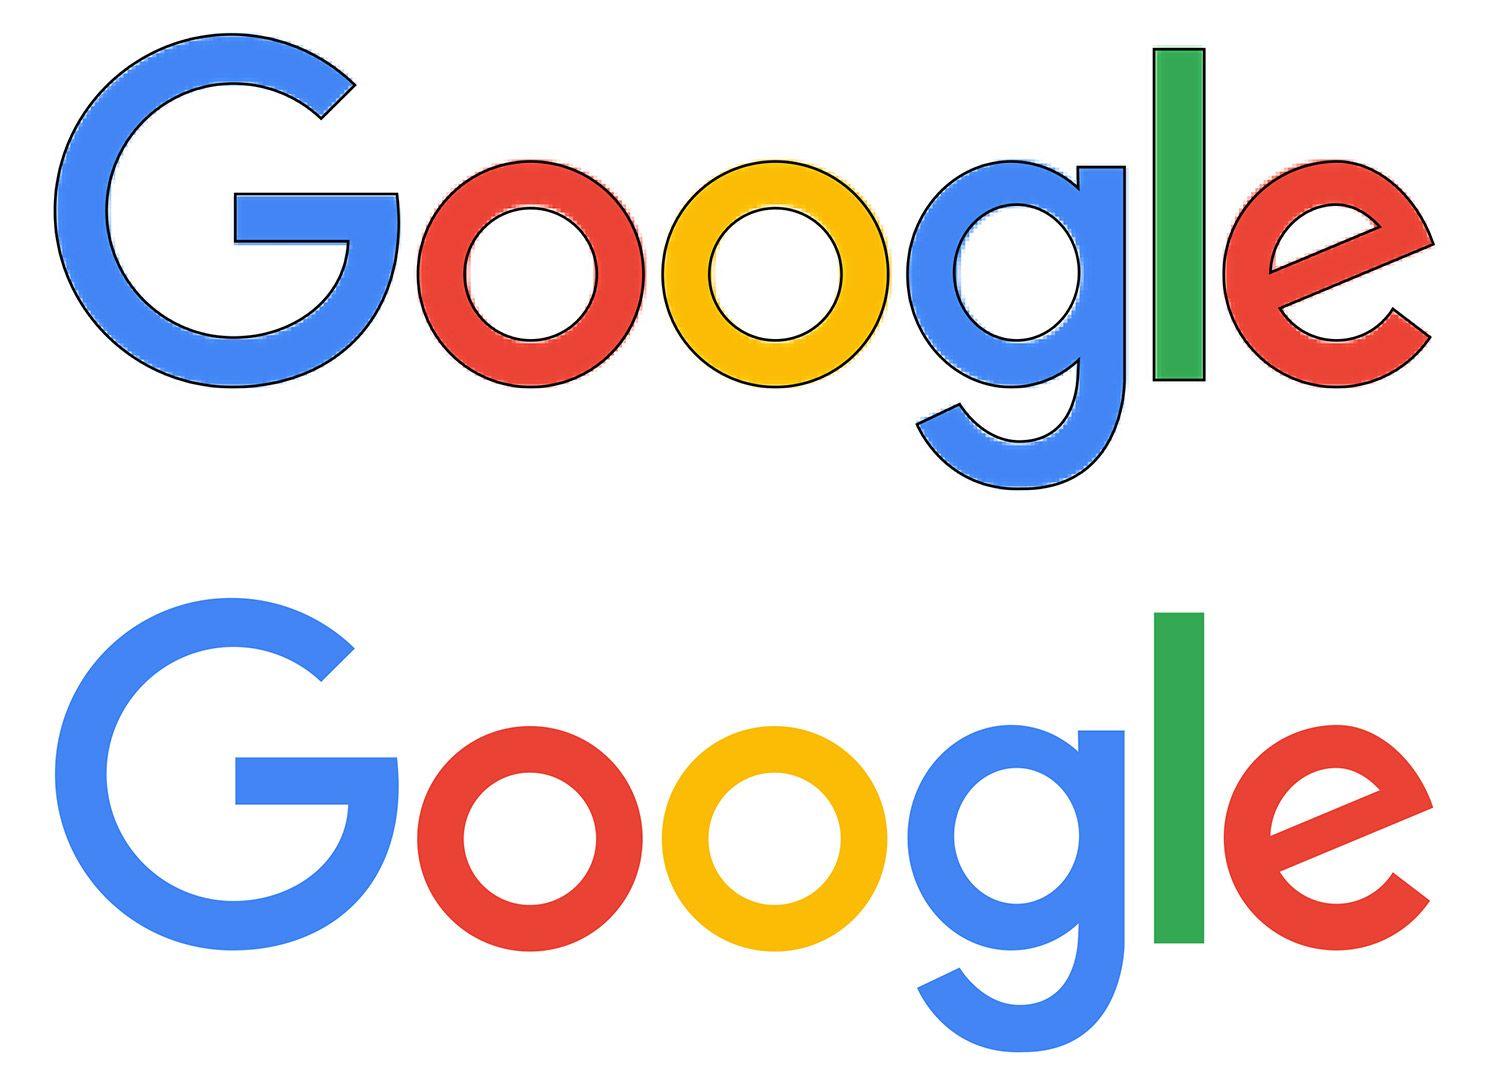 Four Circles Logo - The new Google logo and file sizes